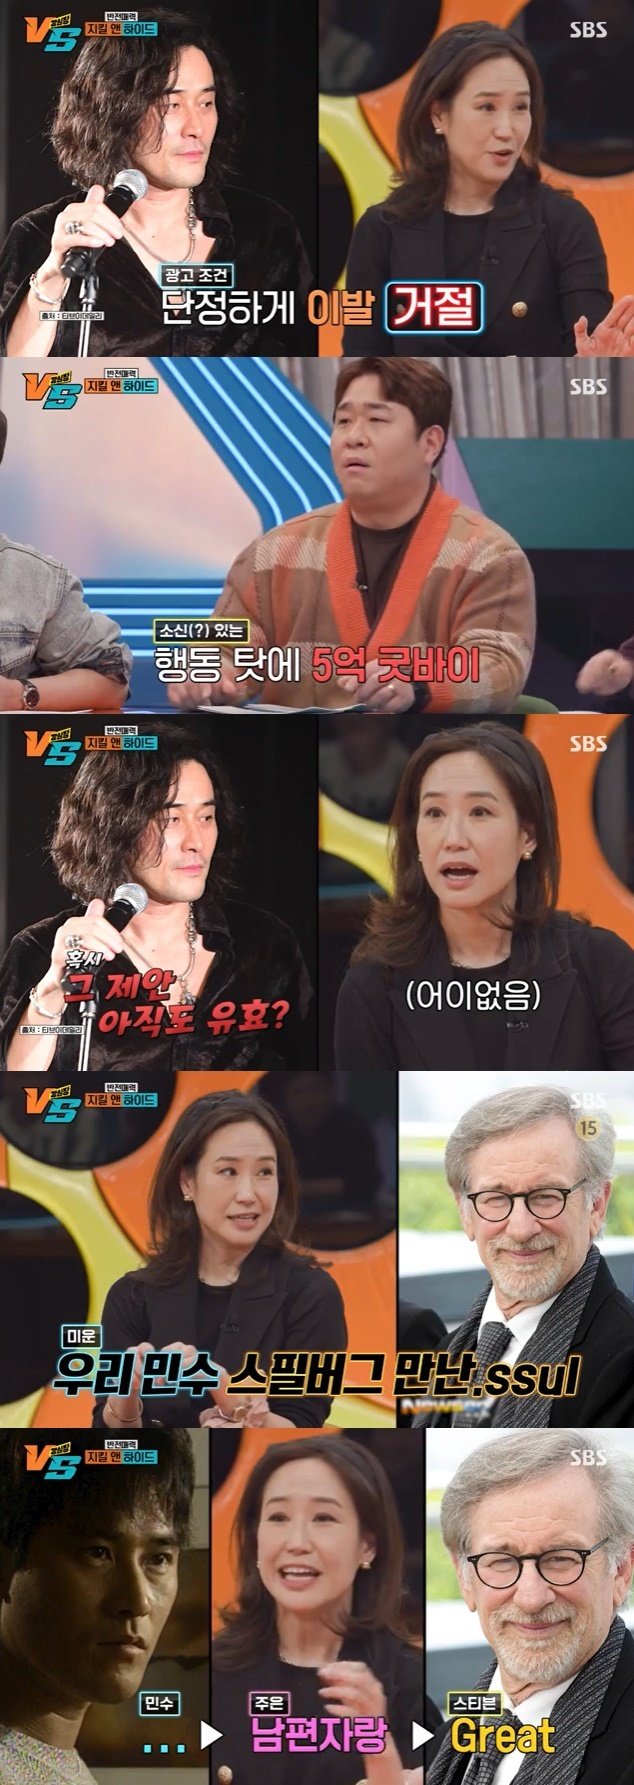 SBS '강심장VS' 캡처